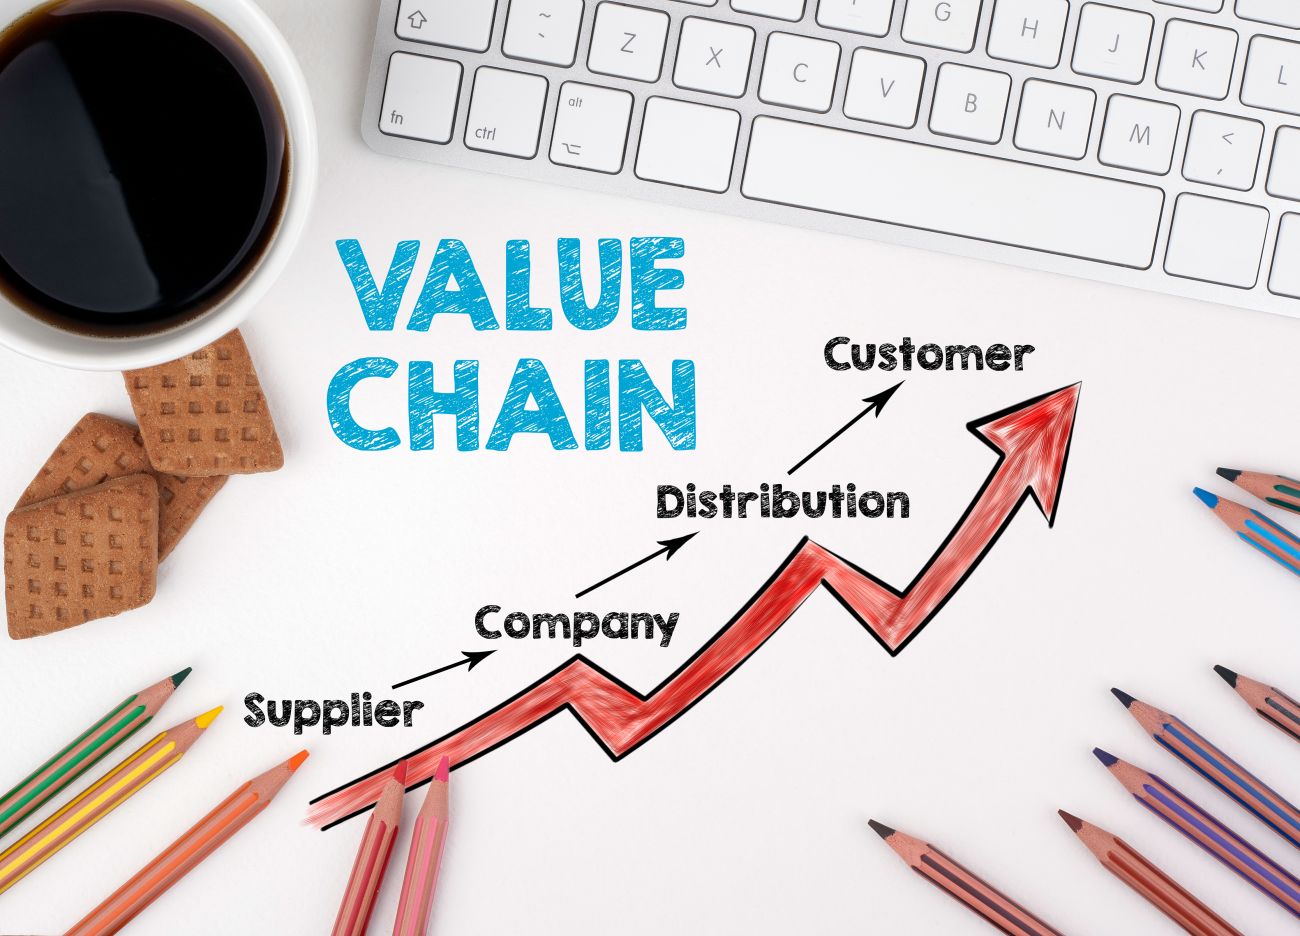  Value chain management for PCB design